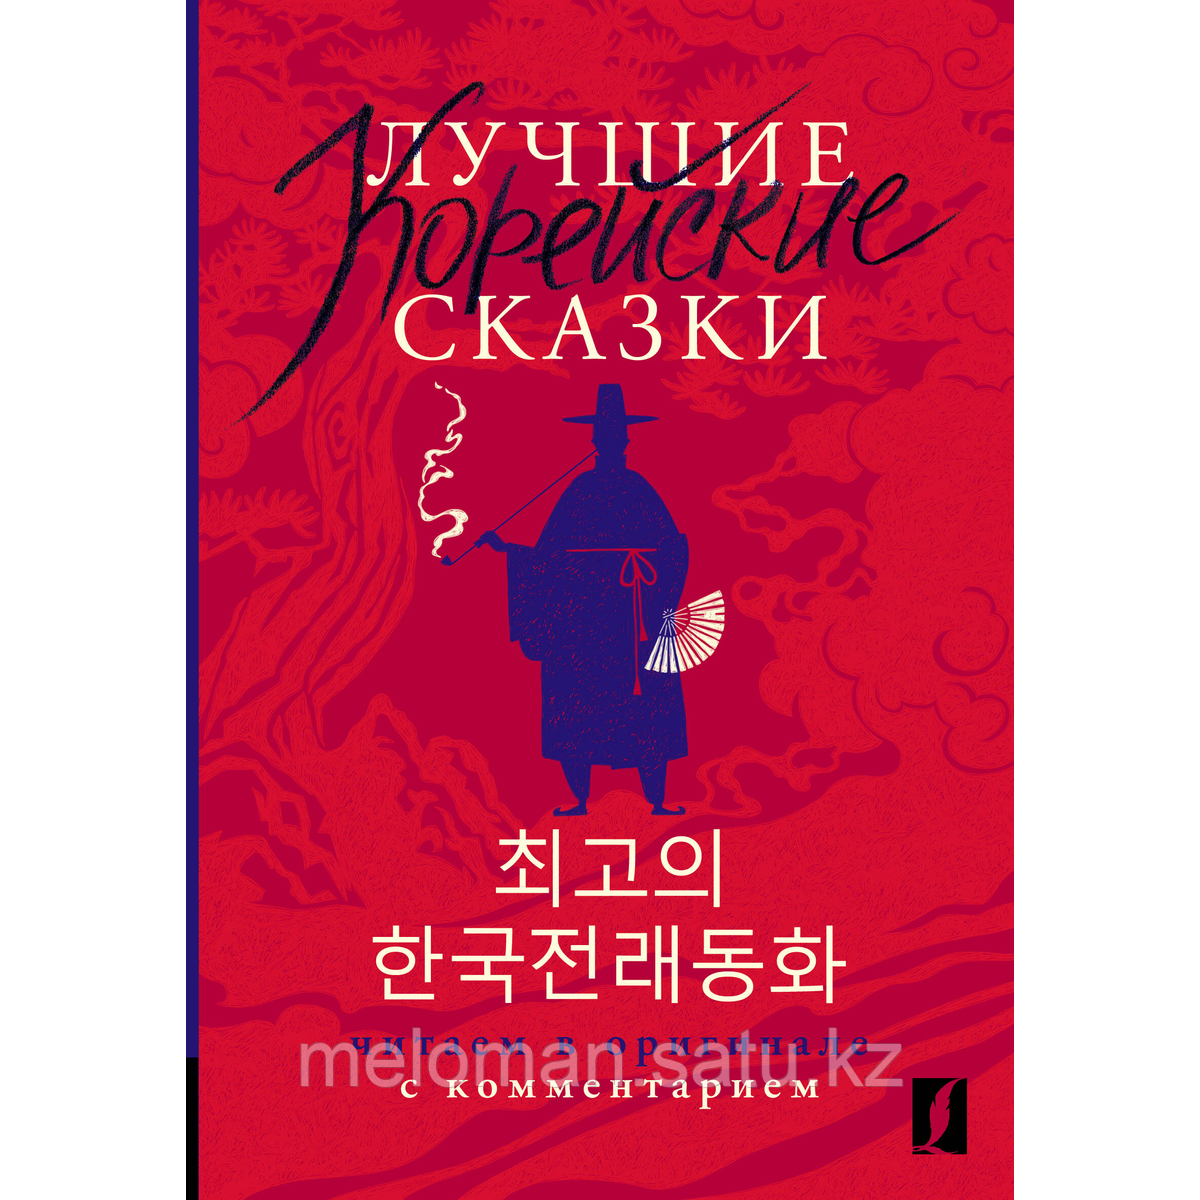 Чун Ин Сун, Погадаева А. В.: Лучшие корейские сказки = Choegoui hanguk jonrae donghwa: читаем в оригинале с